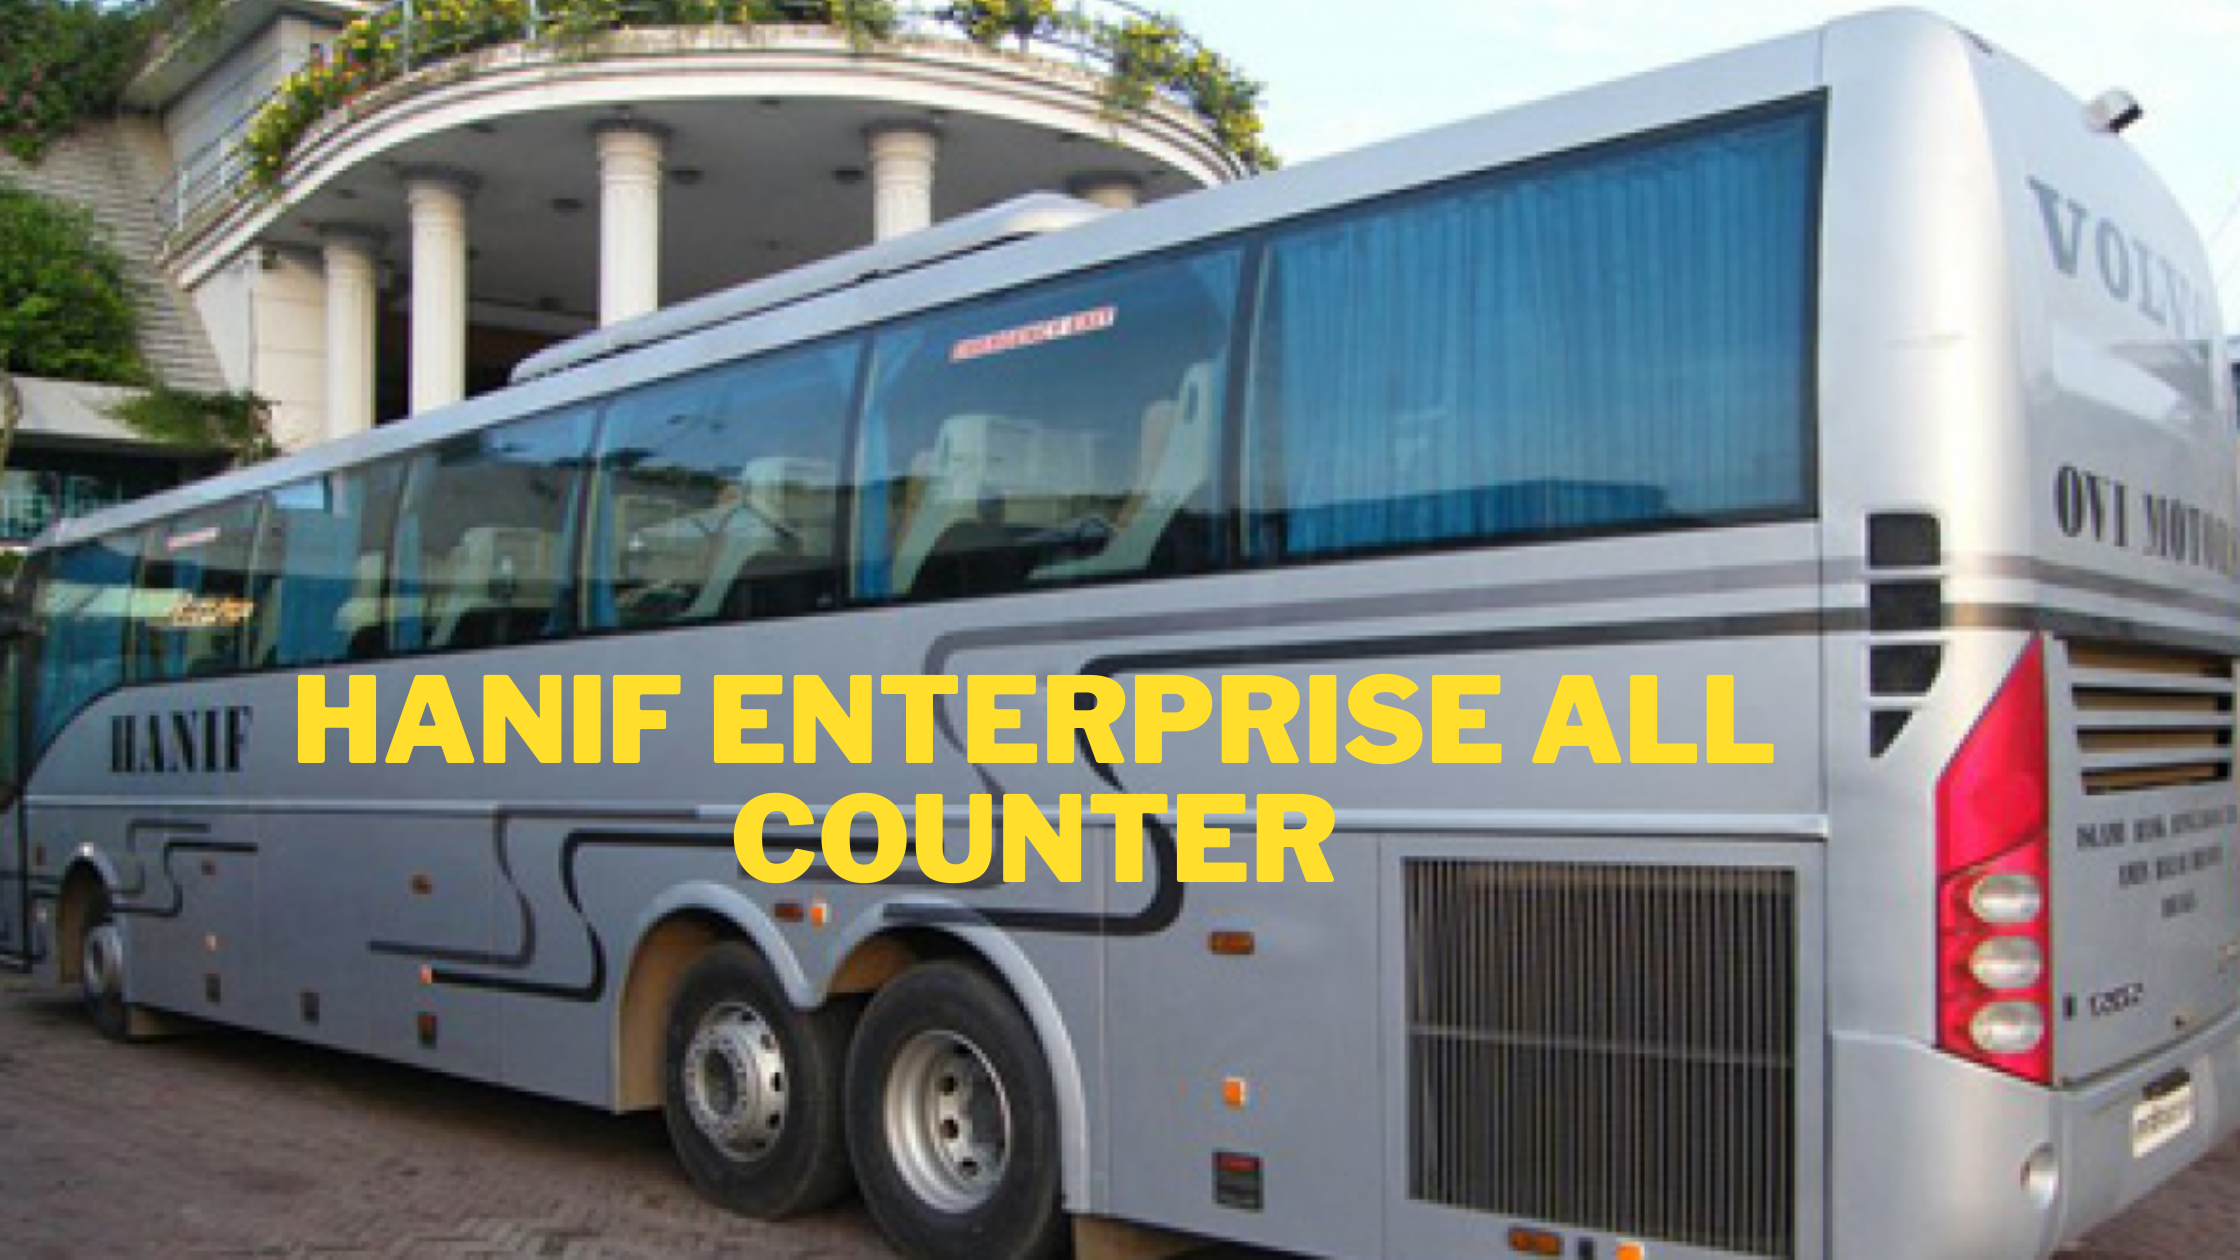 Hanif Enterprise All Counter Mobile Number & Address - Uptowrite.Com